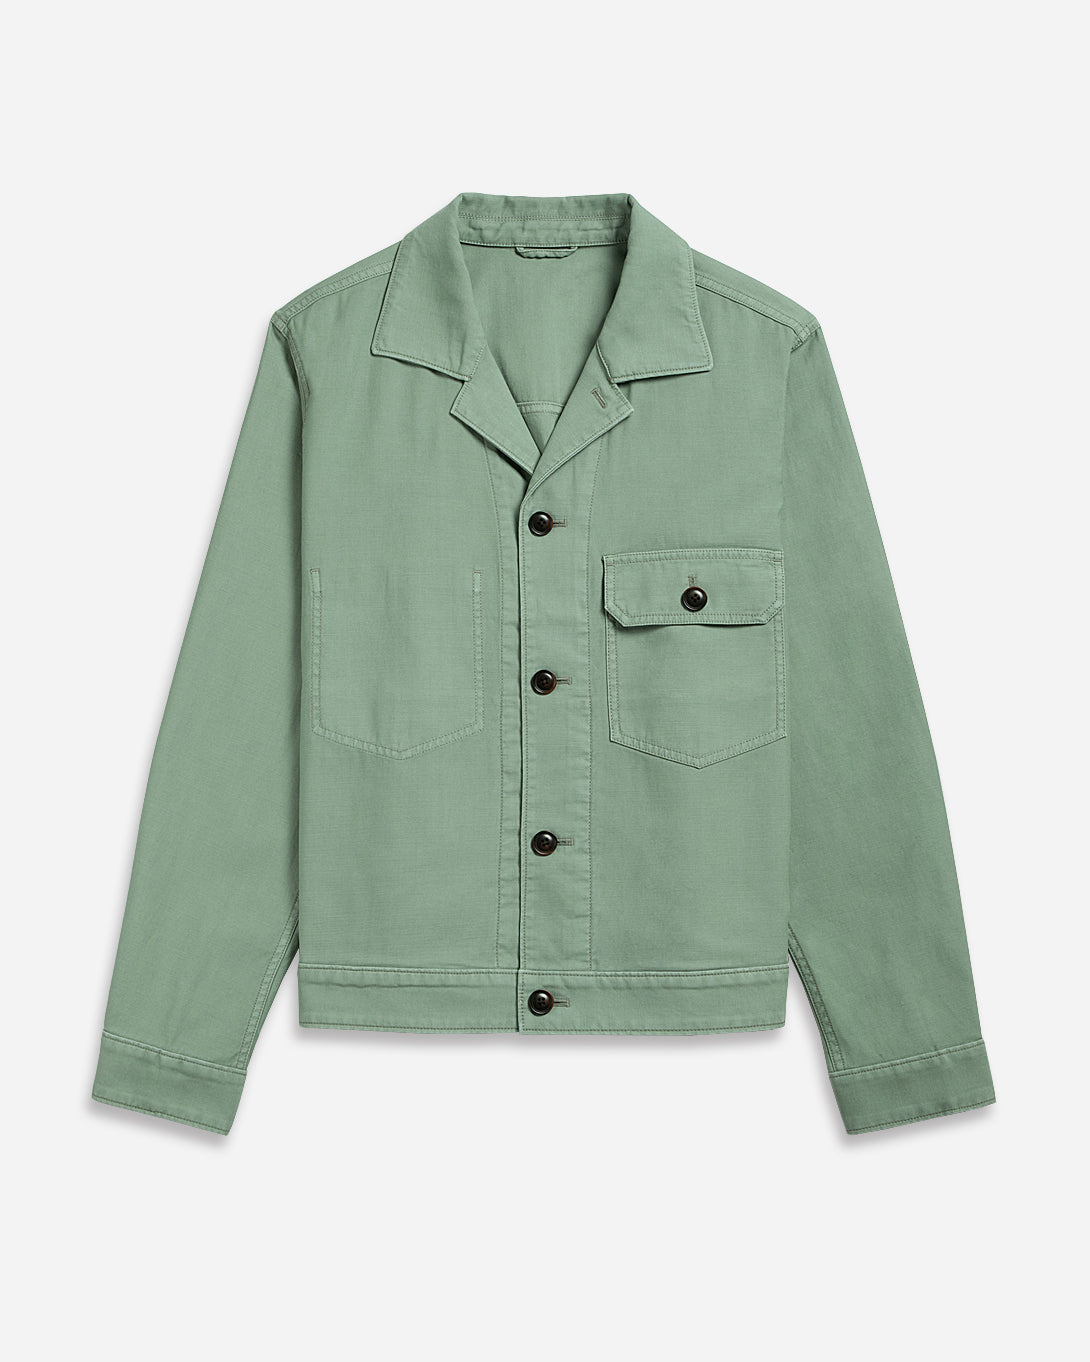 TEA Elliot Garment Dyed Jacket Mens Worker Outerwear Button Closure